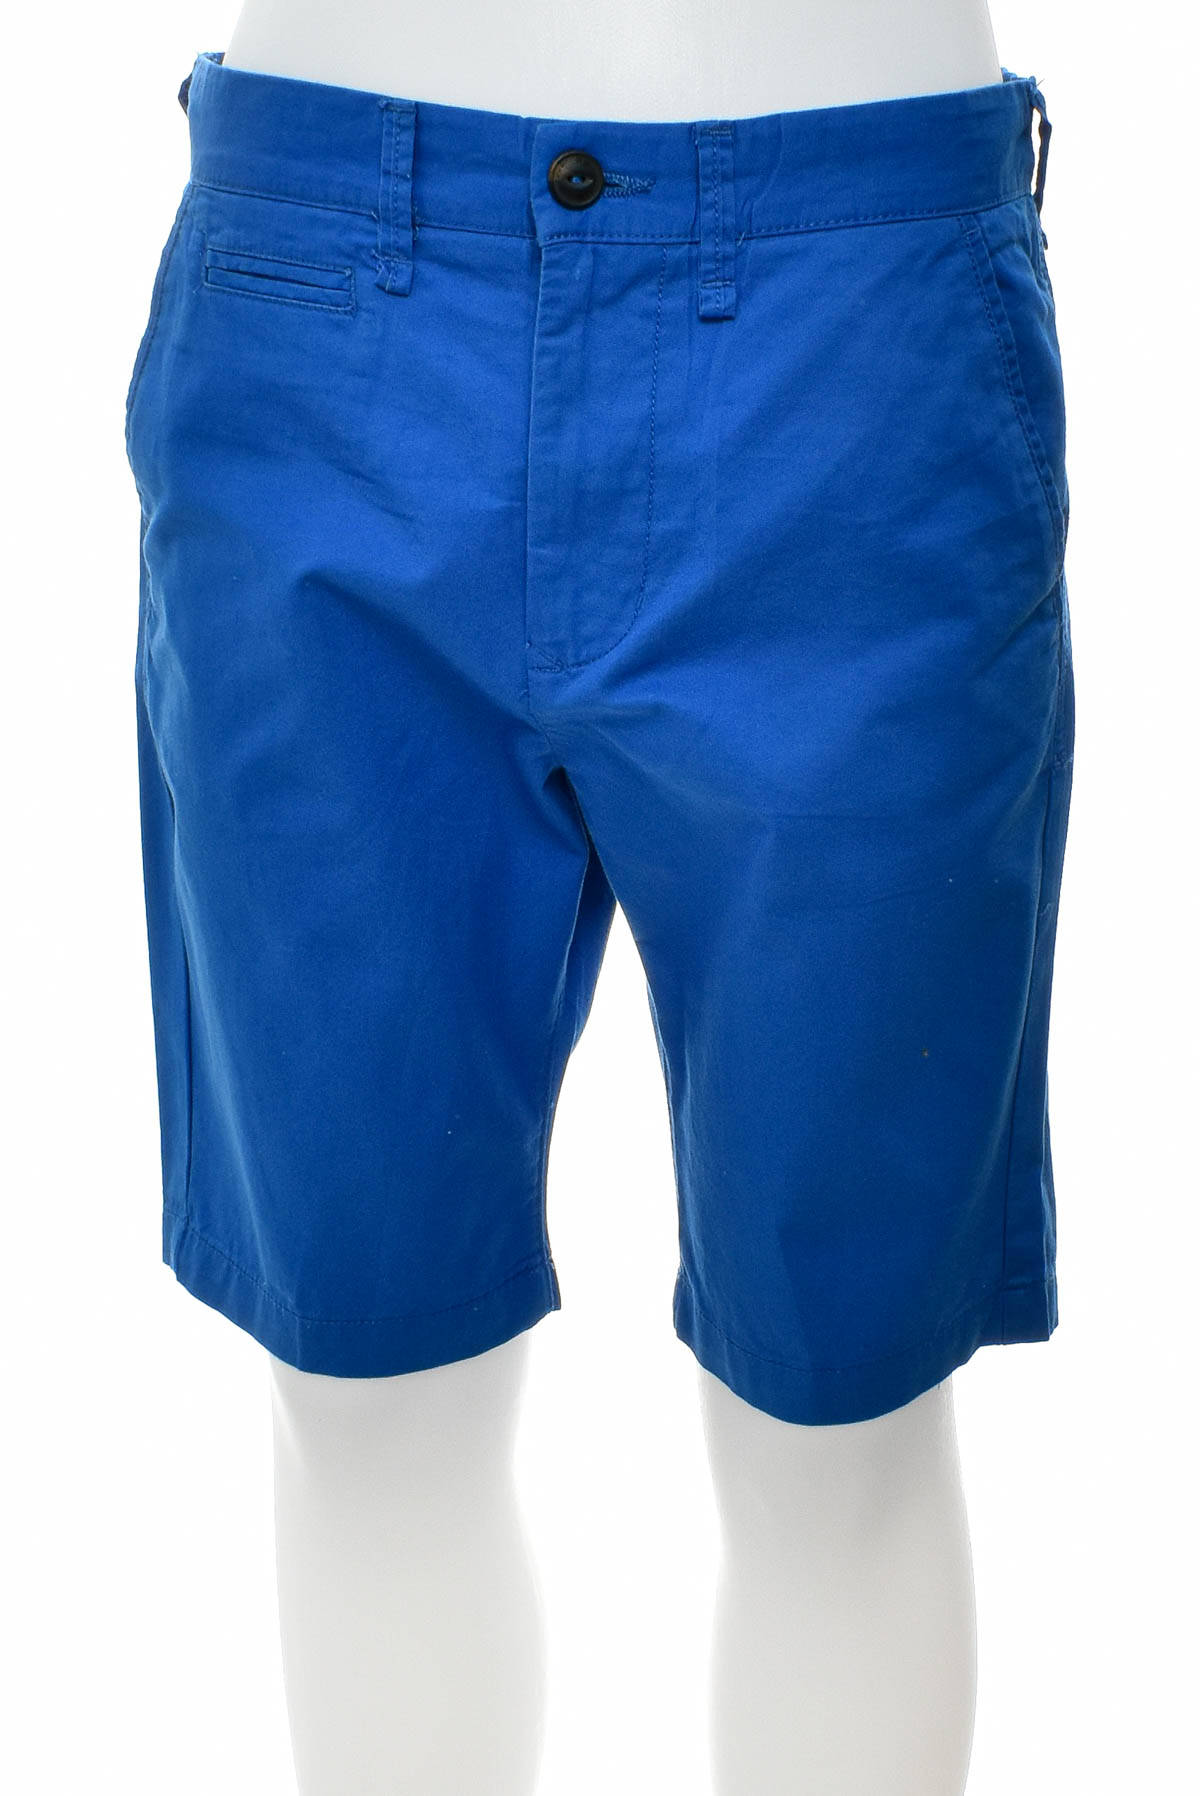 Men's shorts - Red Herring - 0